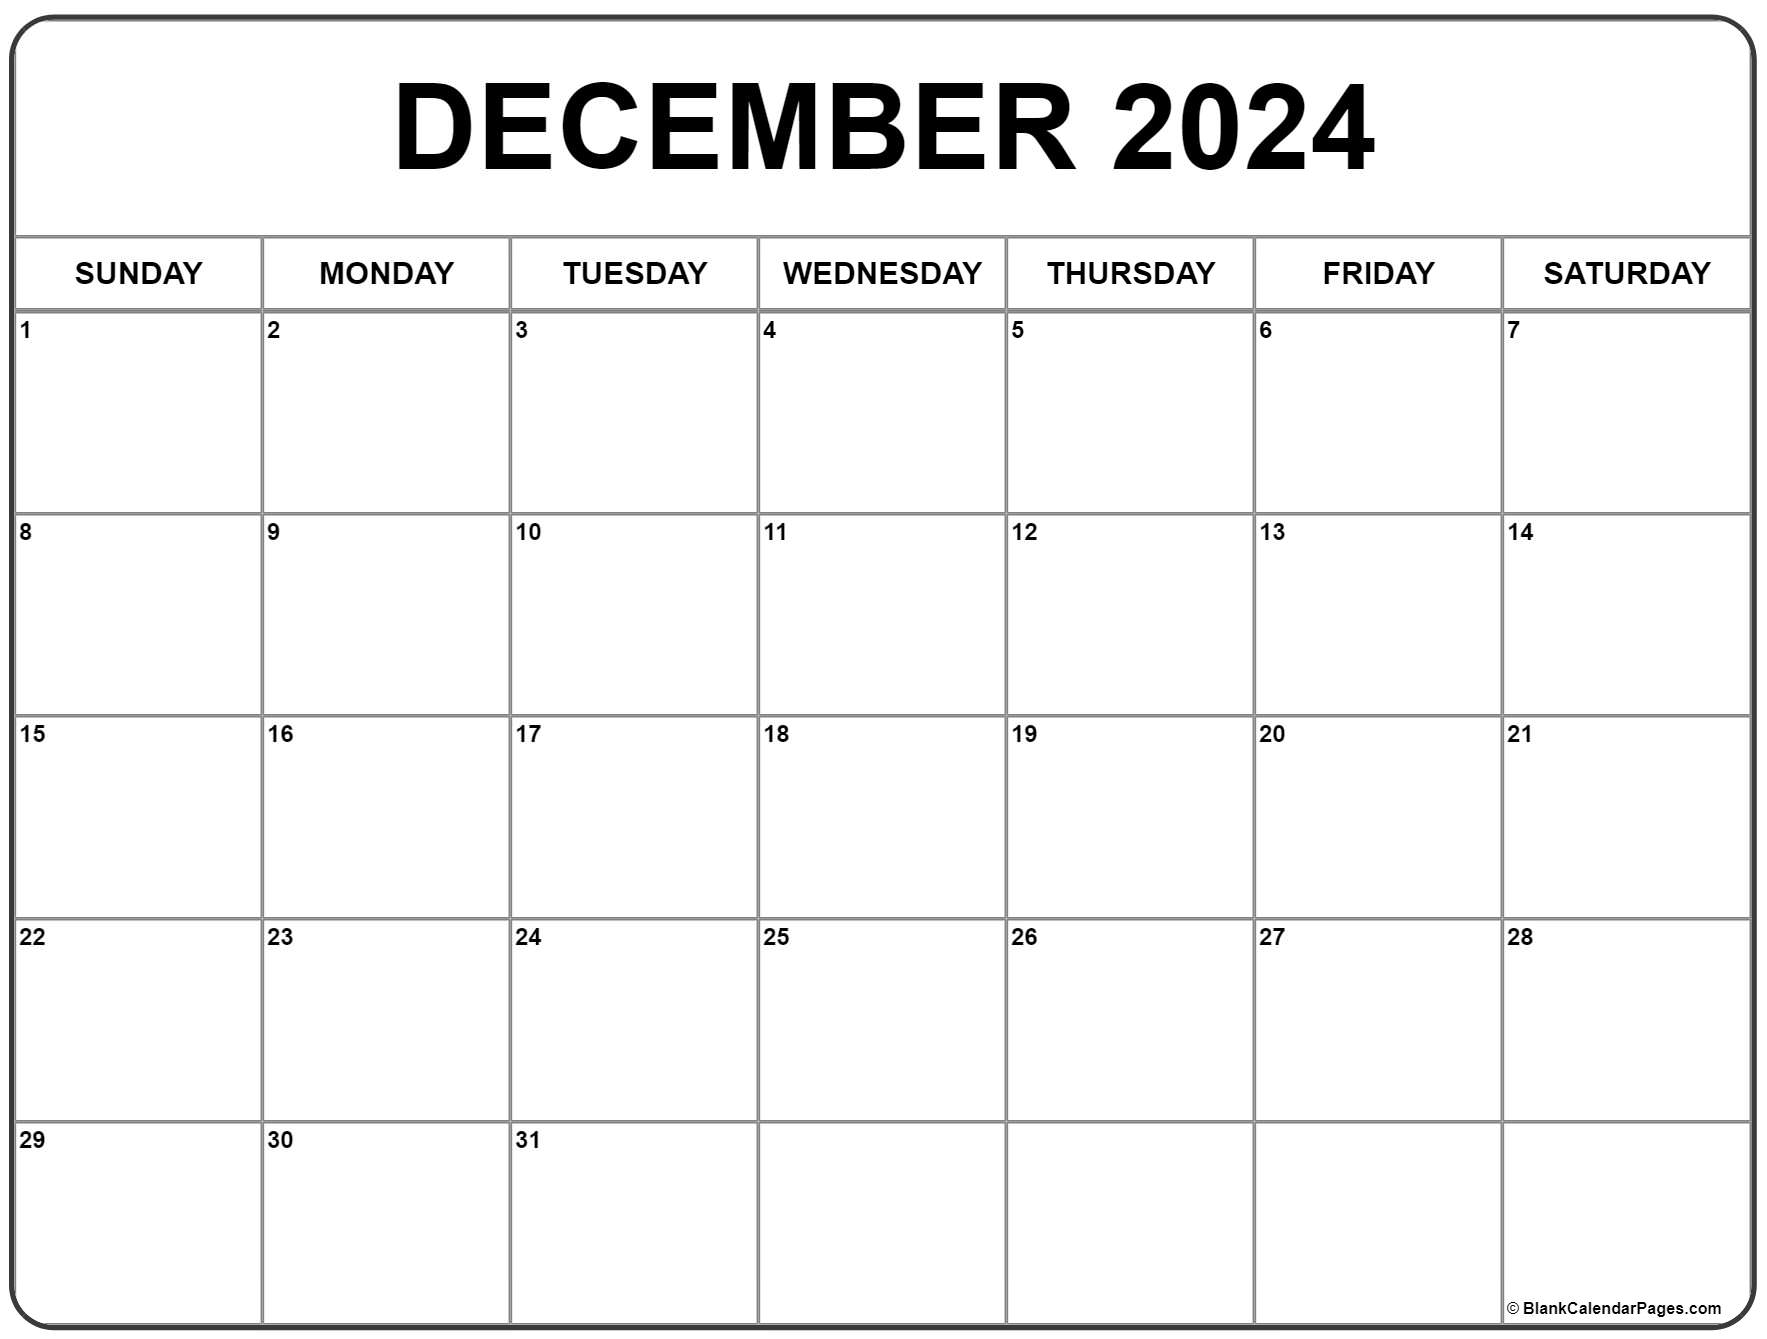 December 2022 Calendar Editable December 2022 Calendar | Free Printable Calendar Templates